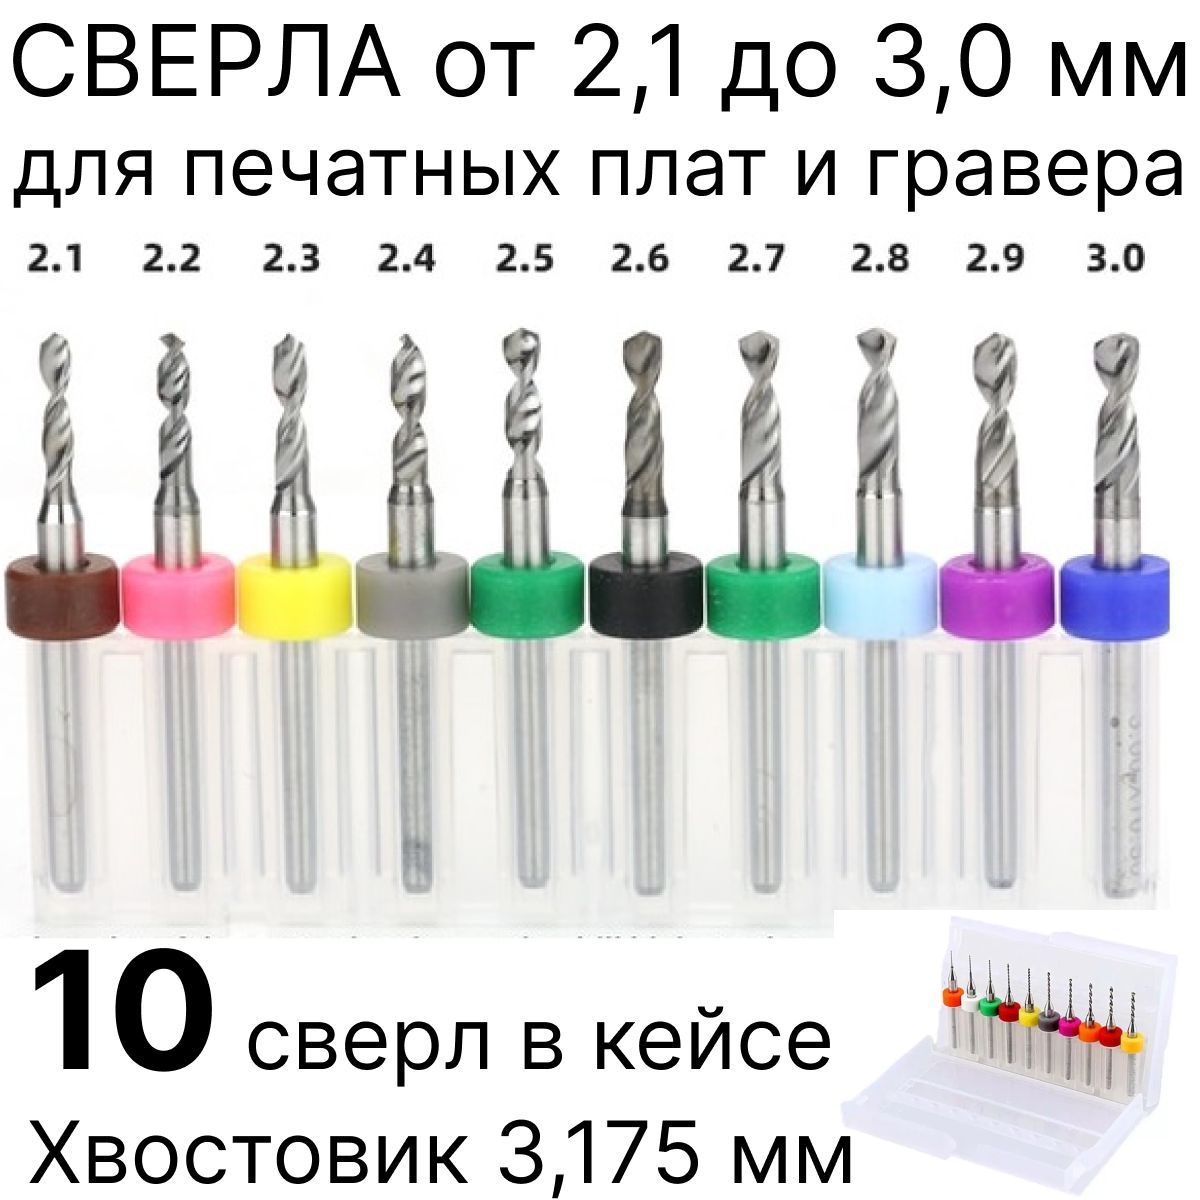 СверладляпечатныхплатPCB,микросверлодлягравера,набор2,1-3,0мм,10штуквфутляре